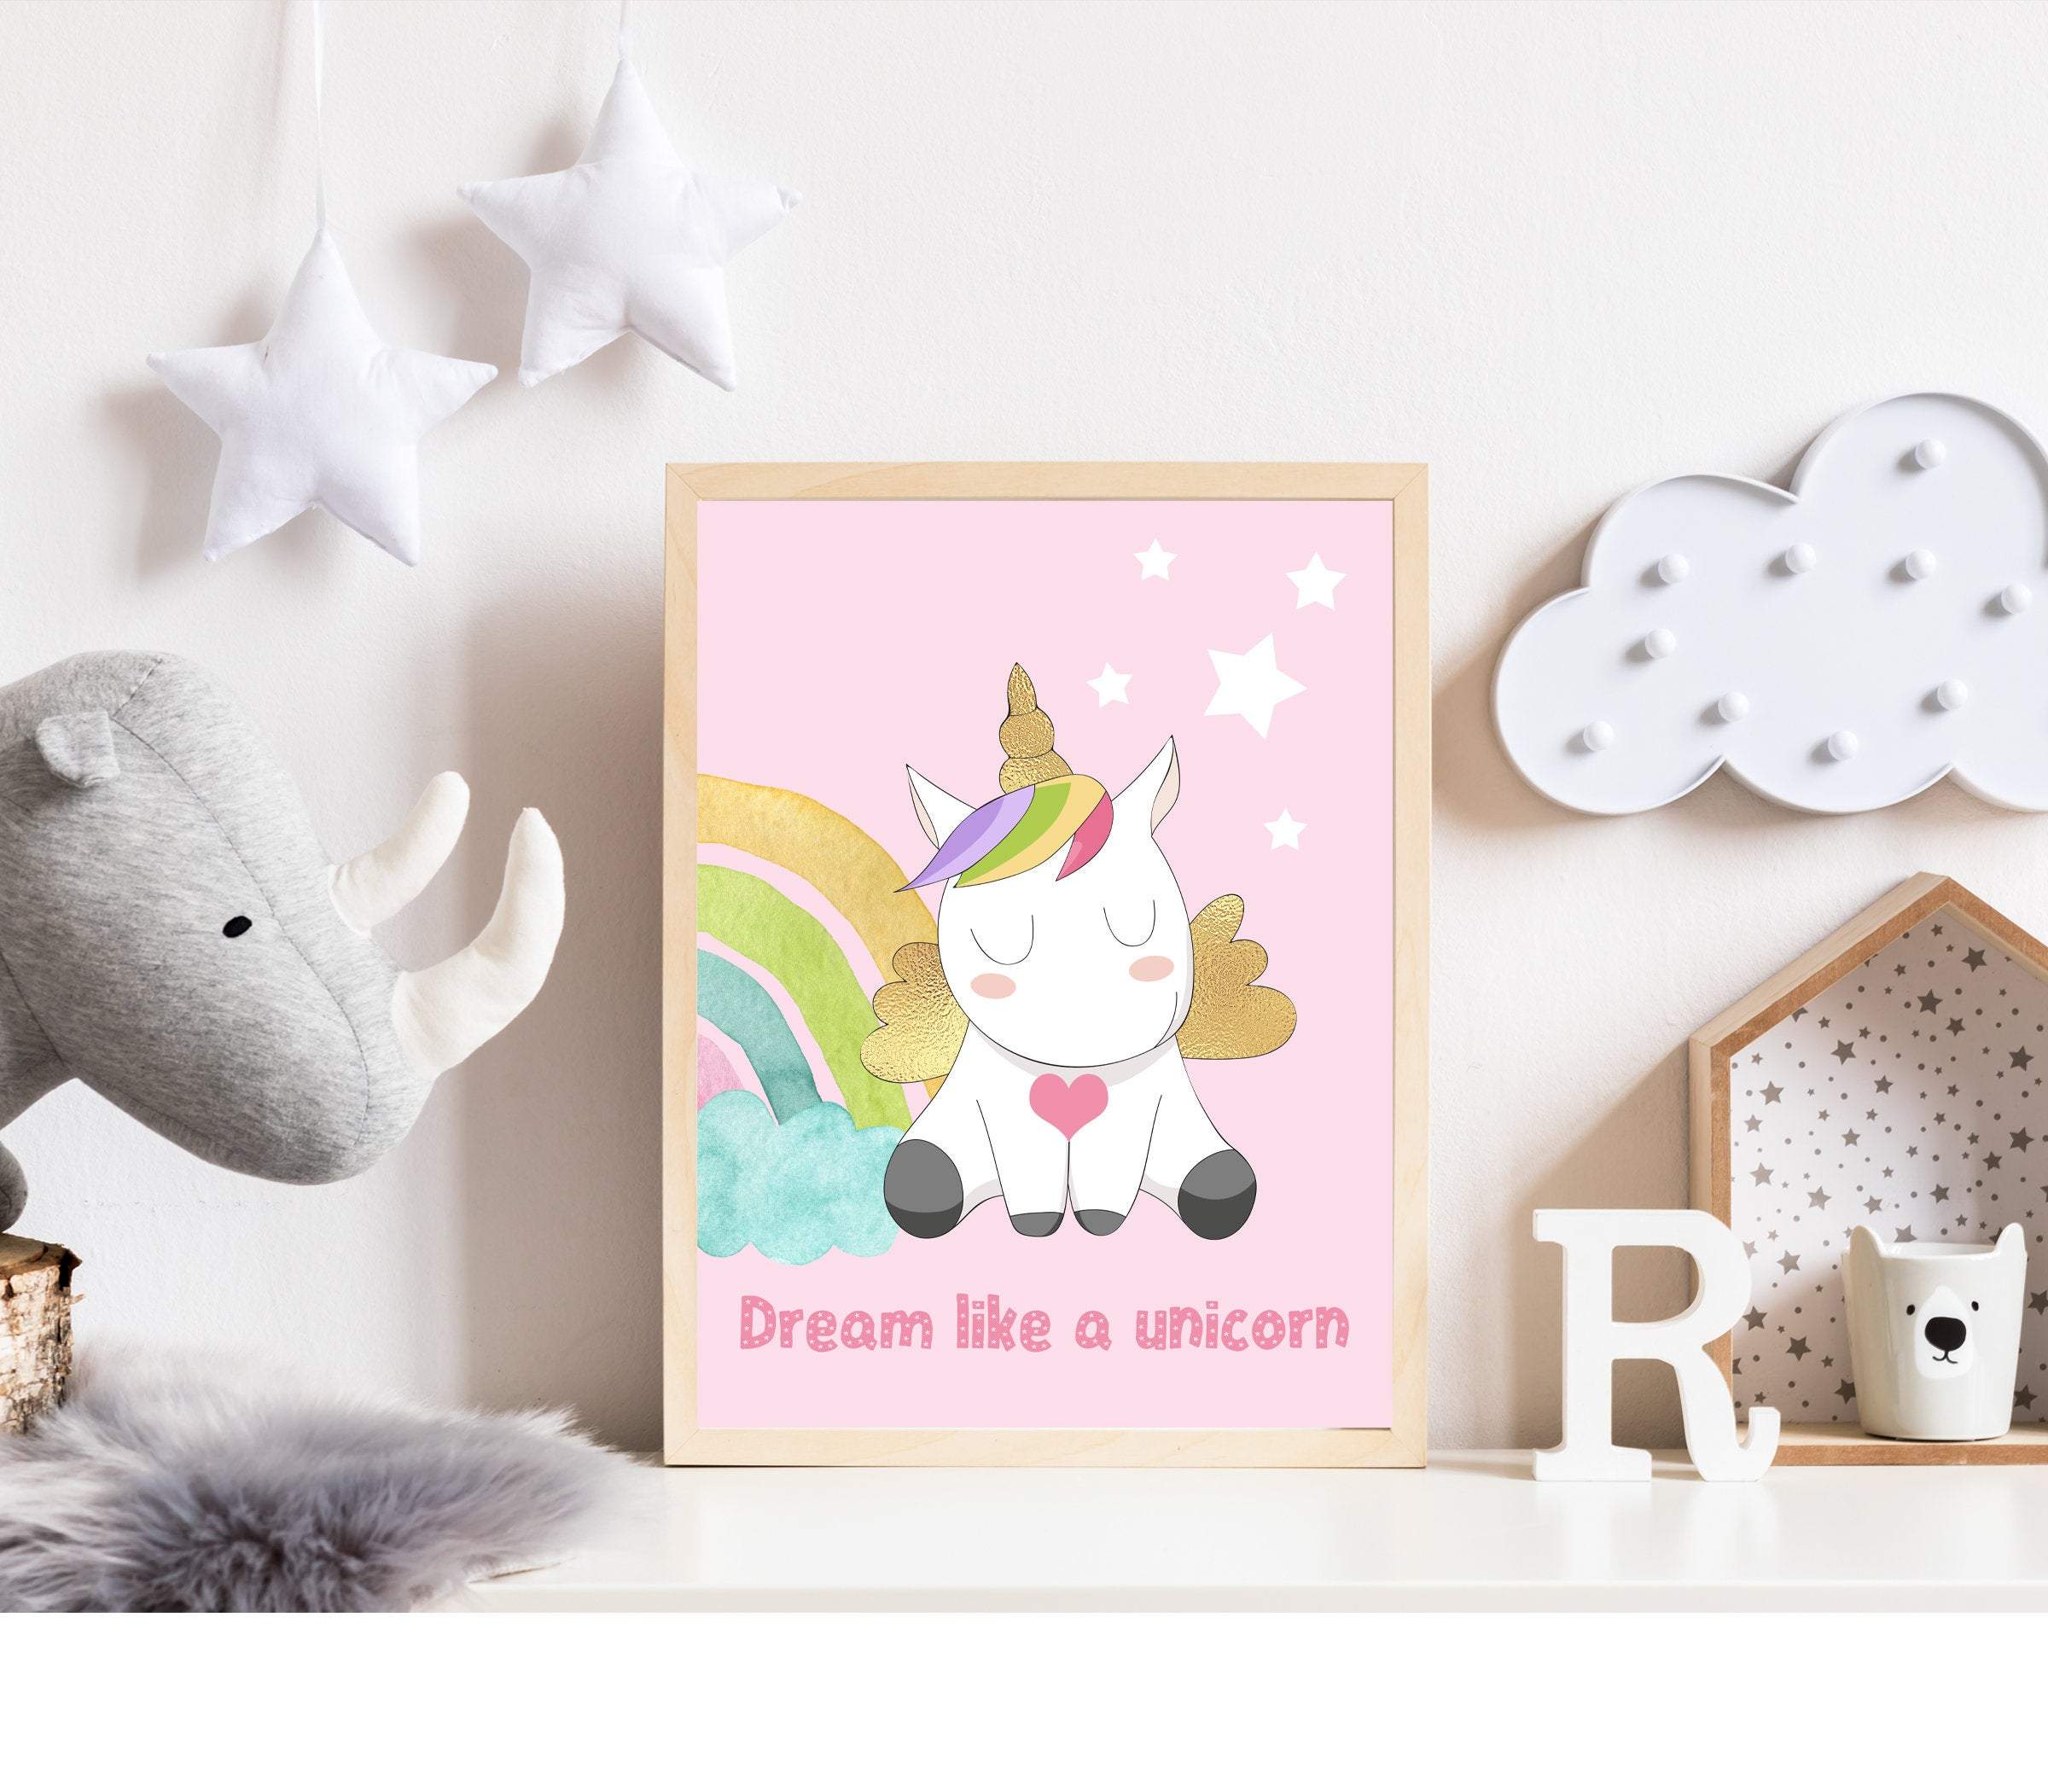 Unicorn art print - Printable unicorn - Unicorn wall art - Pink nursery printables - Nursery wall art - Kids room wall art - Unicorn print nursery art print baby nursery bedroom decor